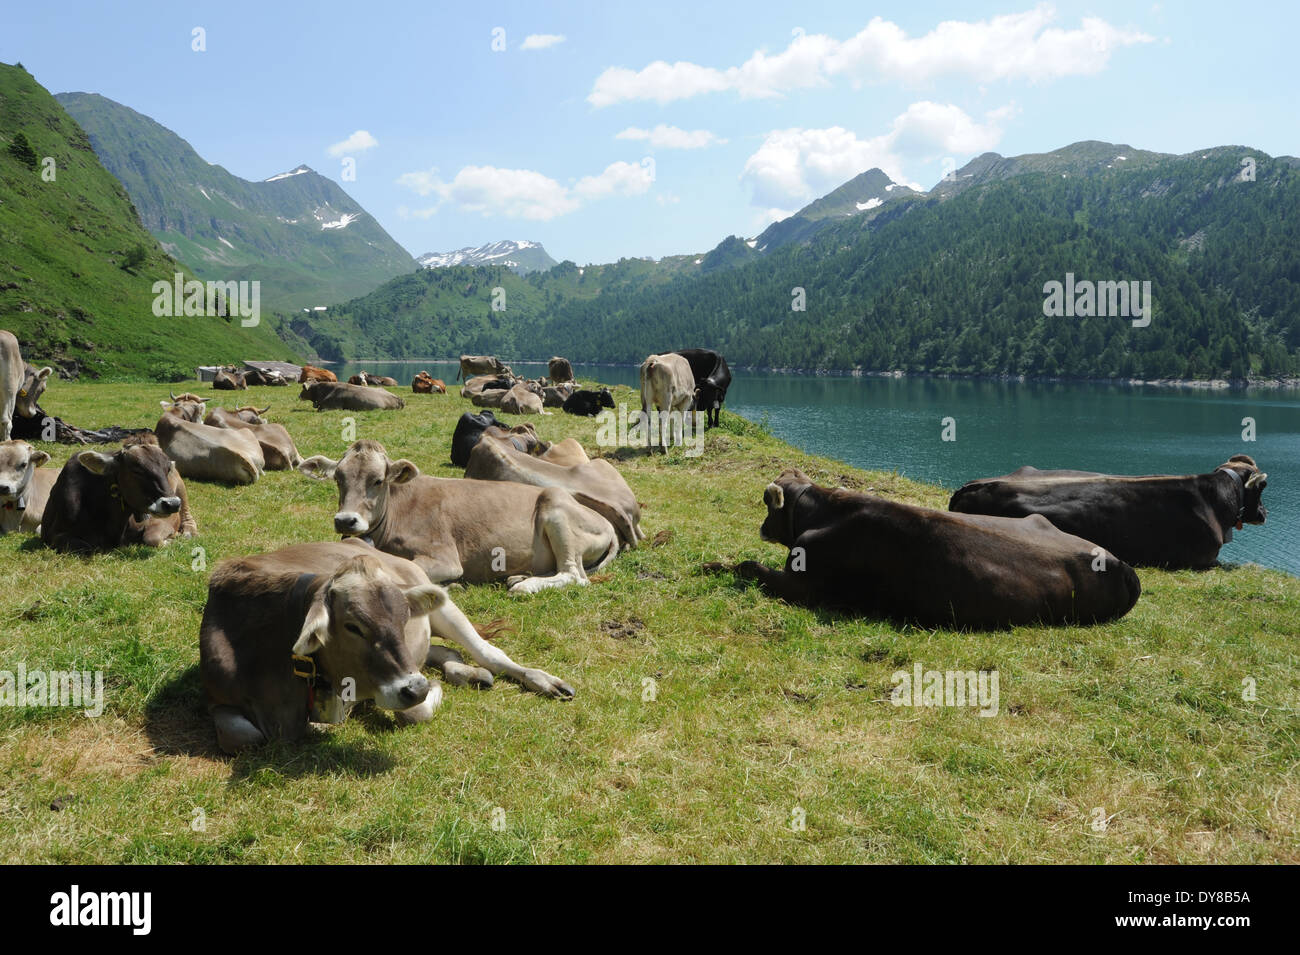 Suiza, Ticino, Ritom, Piora, Lago, vacas, mentira Foto de stock